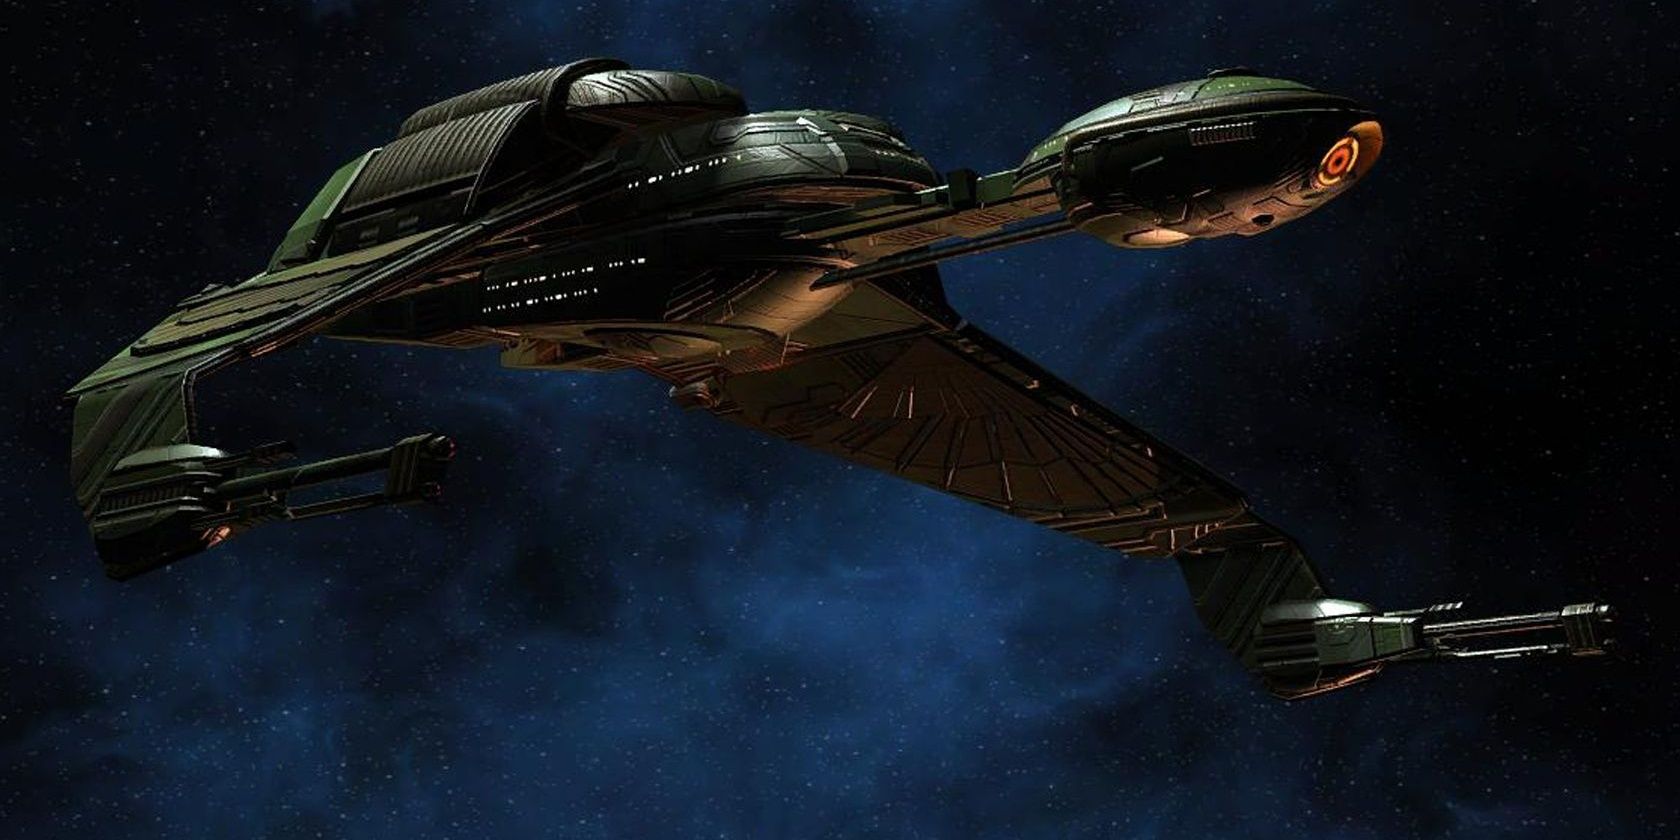 Star Trek Klingon Bird-of-Prey